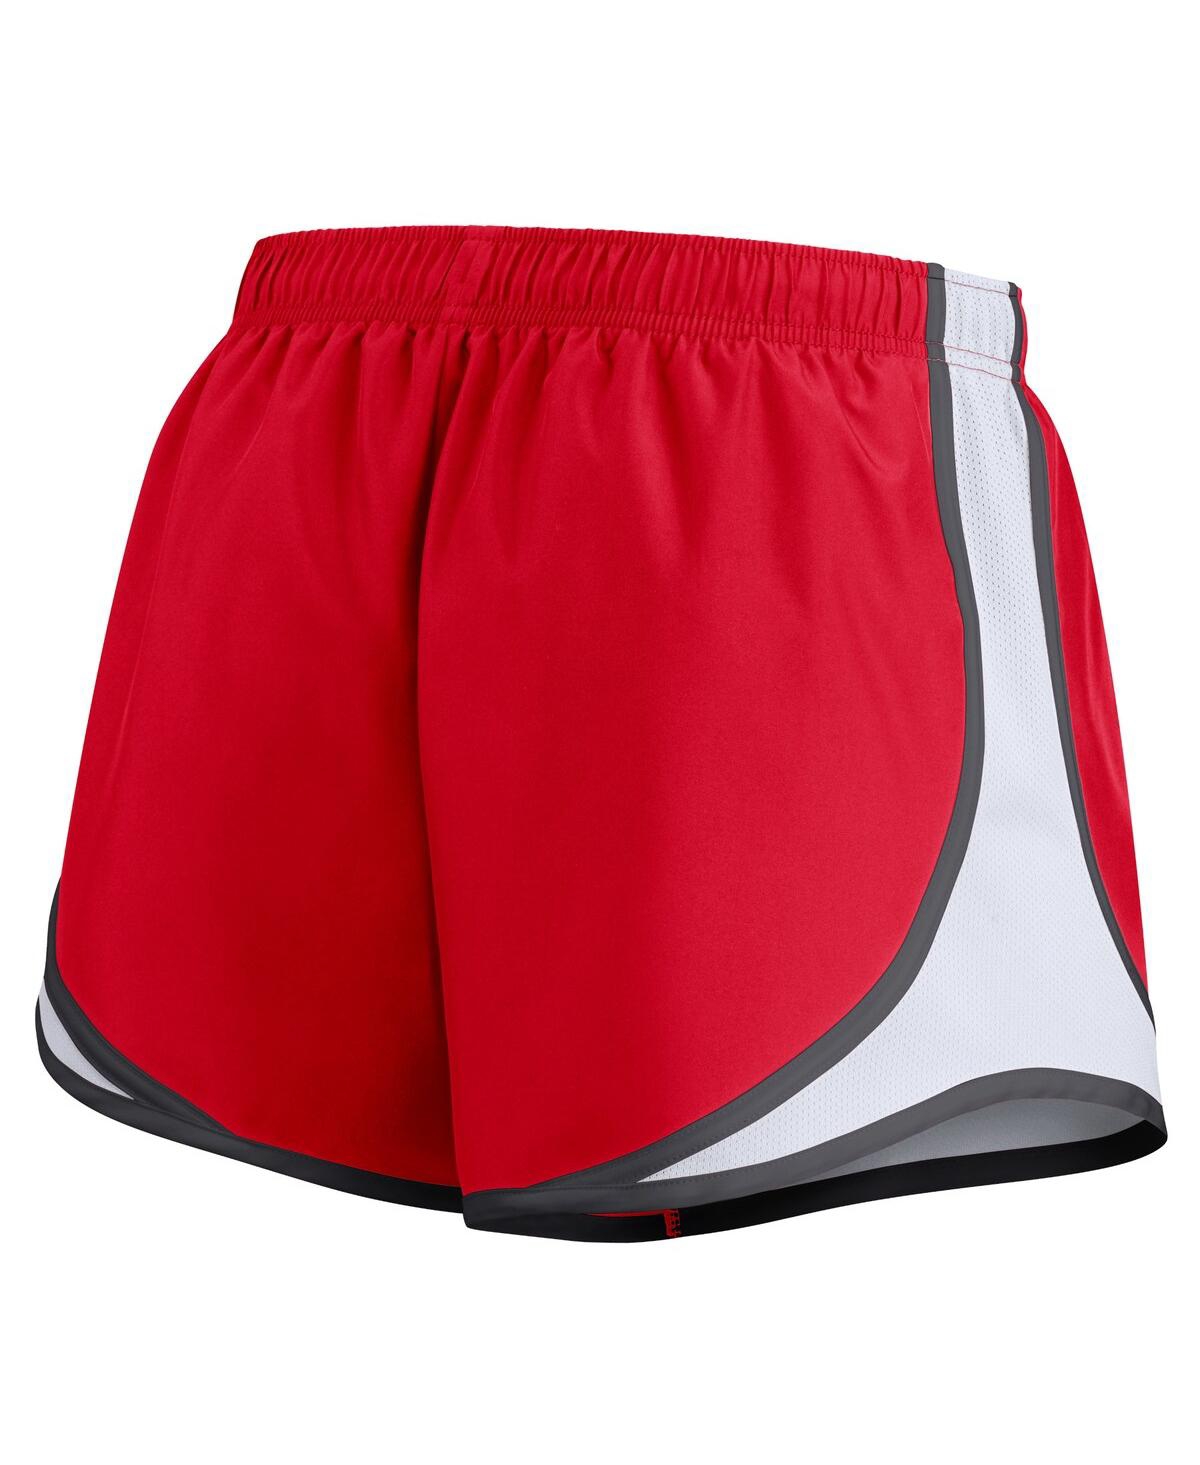 Shop Nike Women's  Red Kansas City Chiefs Plus Size Tempo Shorts